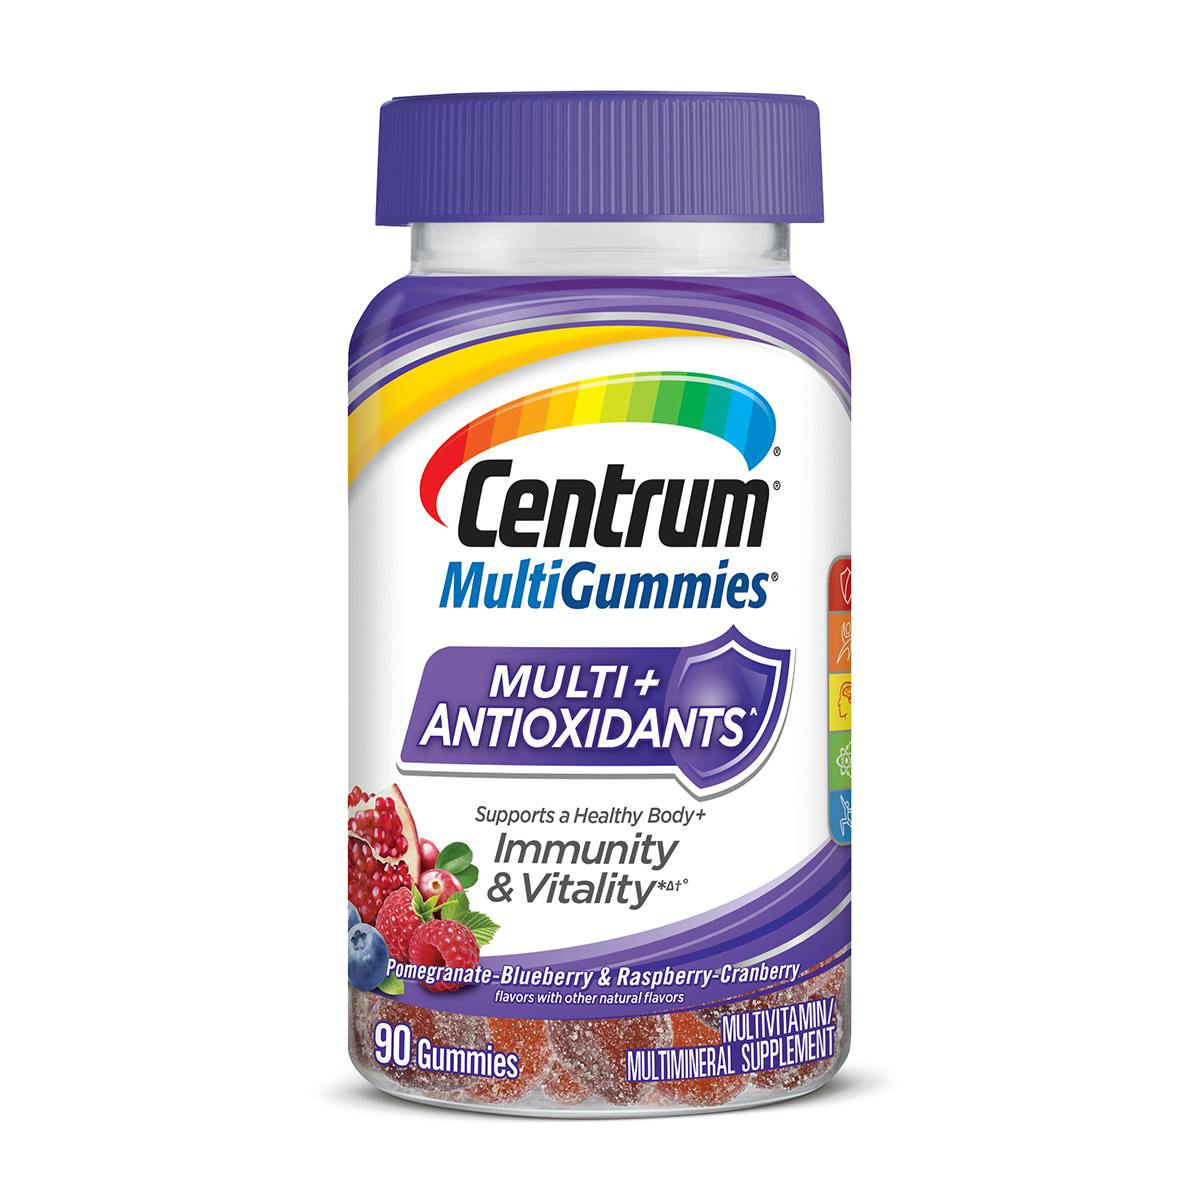 Box of Centrum Multigummies Multi + Antioxidants